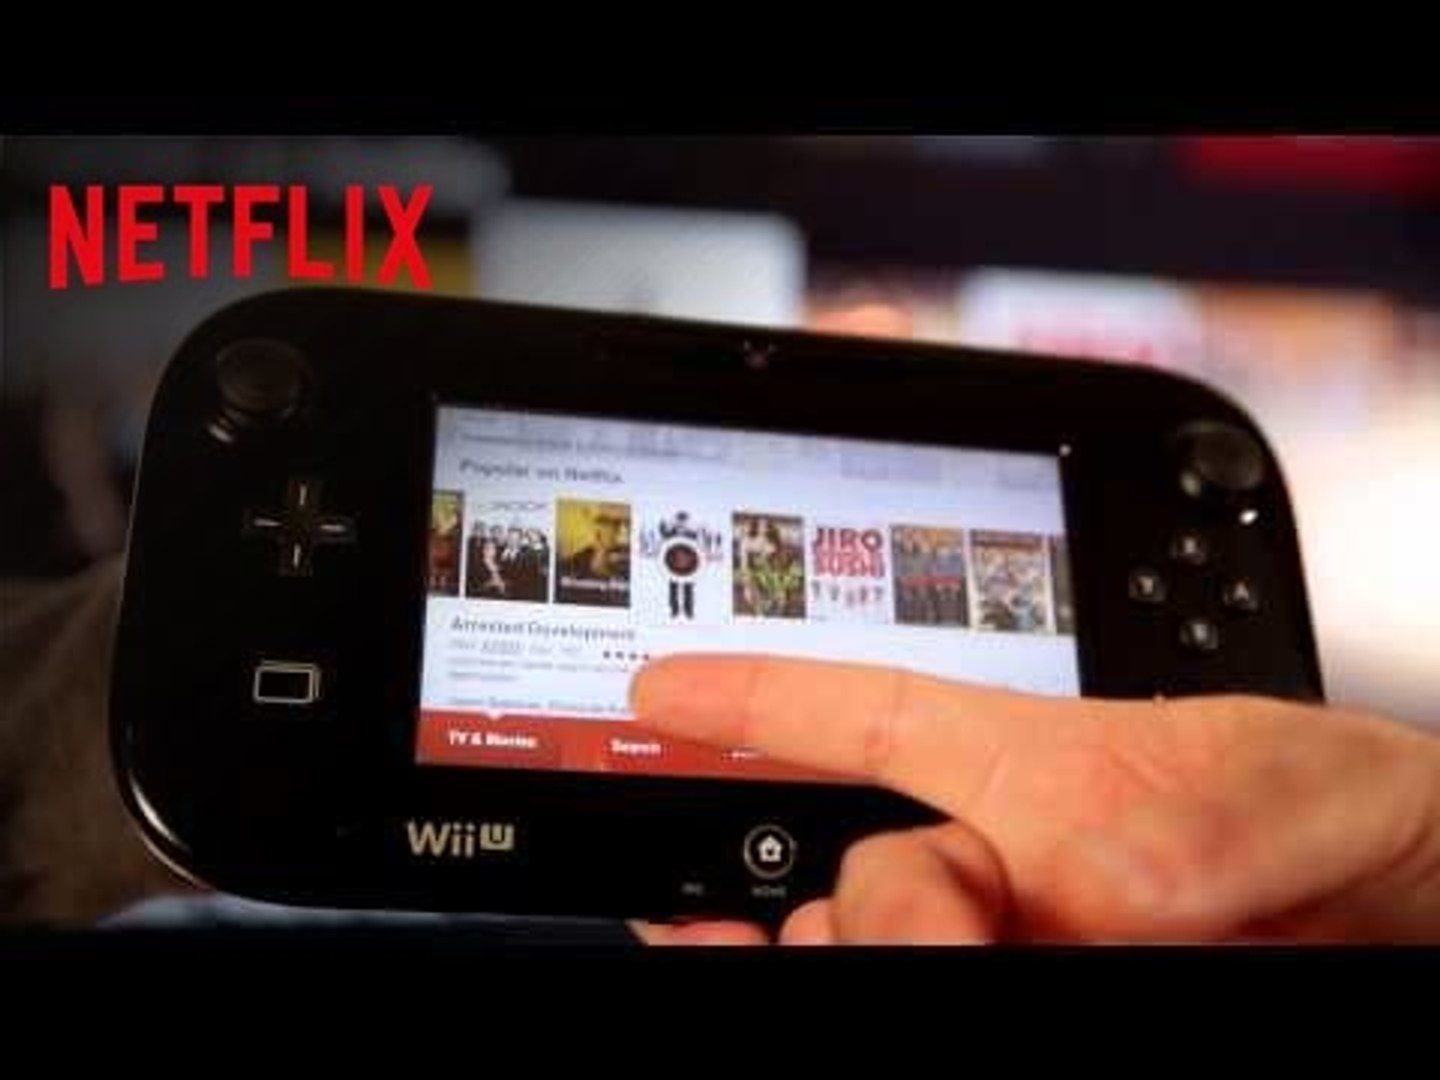 First Look: Netflix on Wii U | Netflix